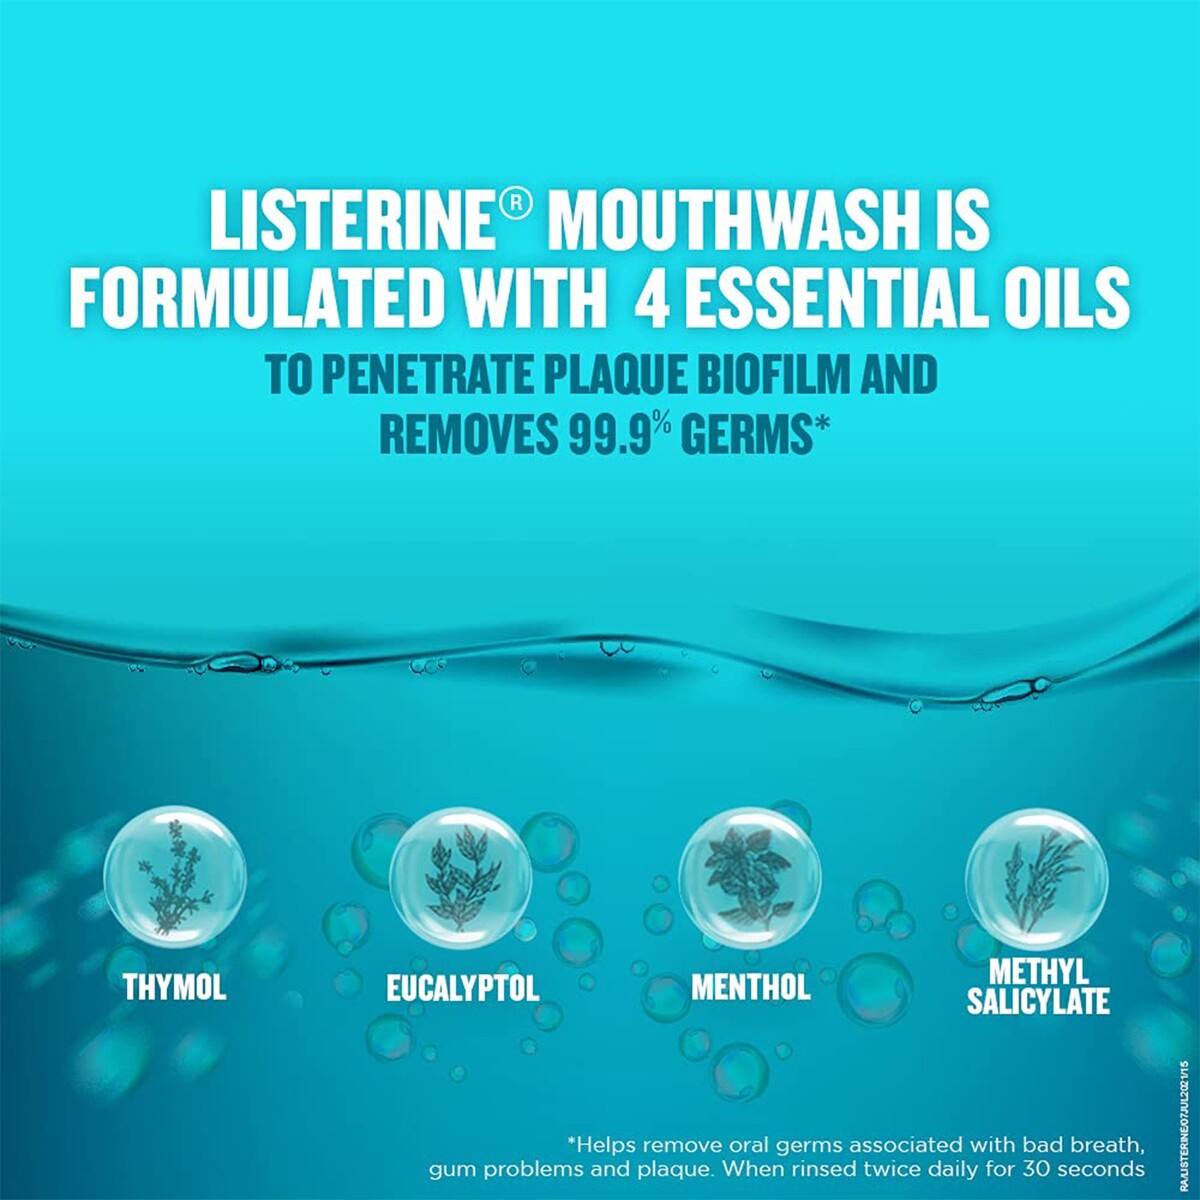 Listerine Mouthwash Cool Mint 250ml